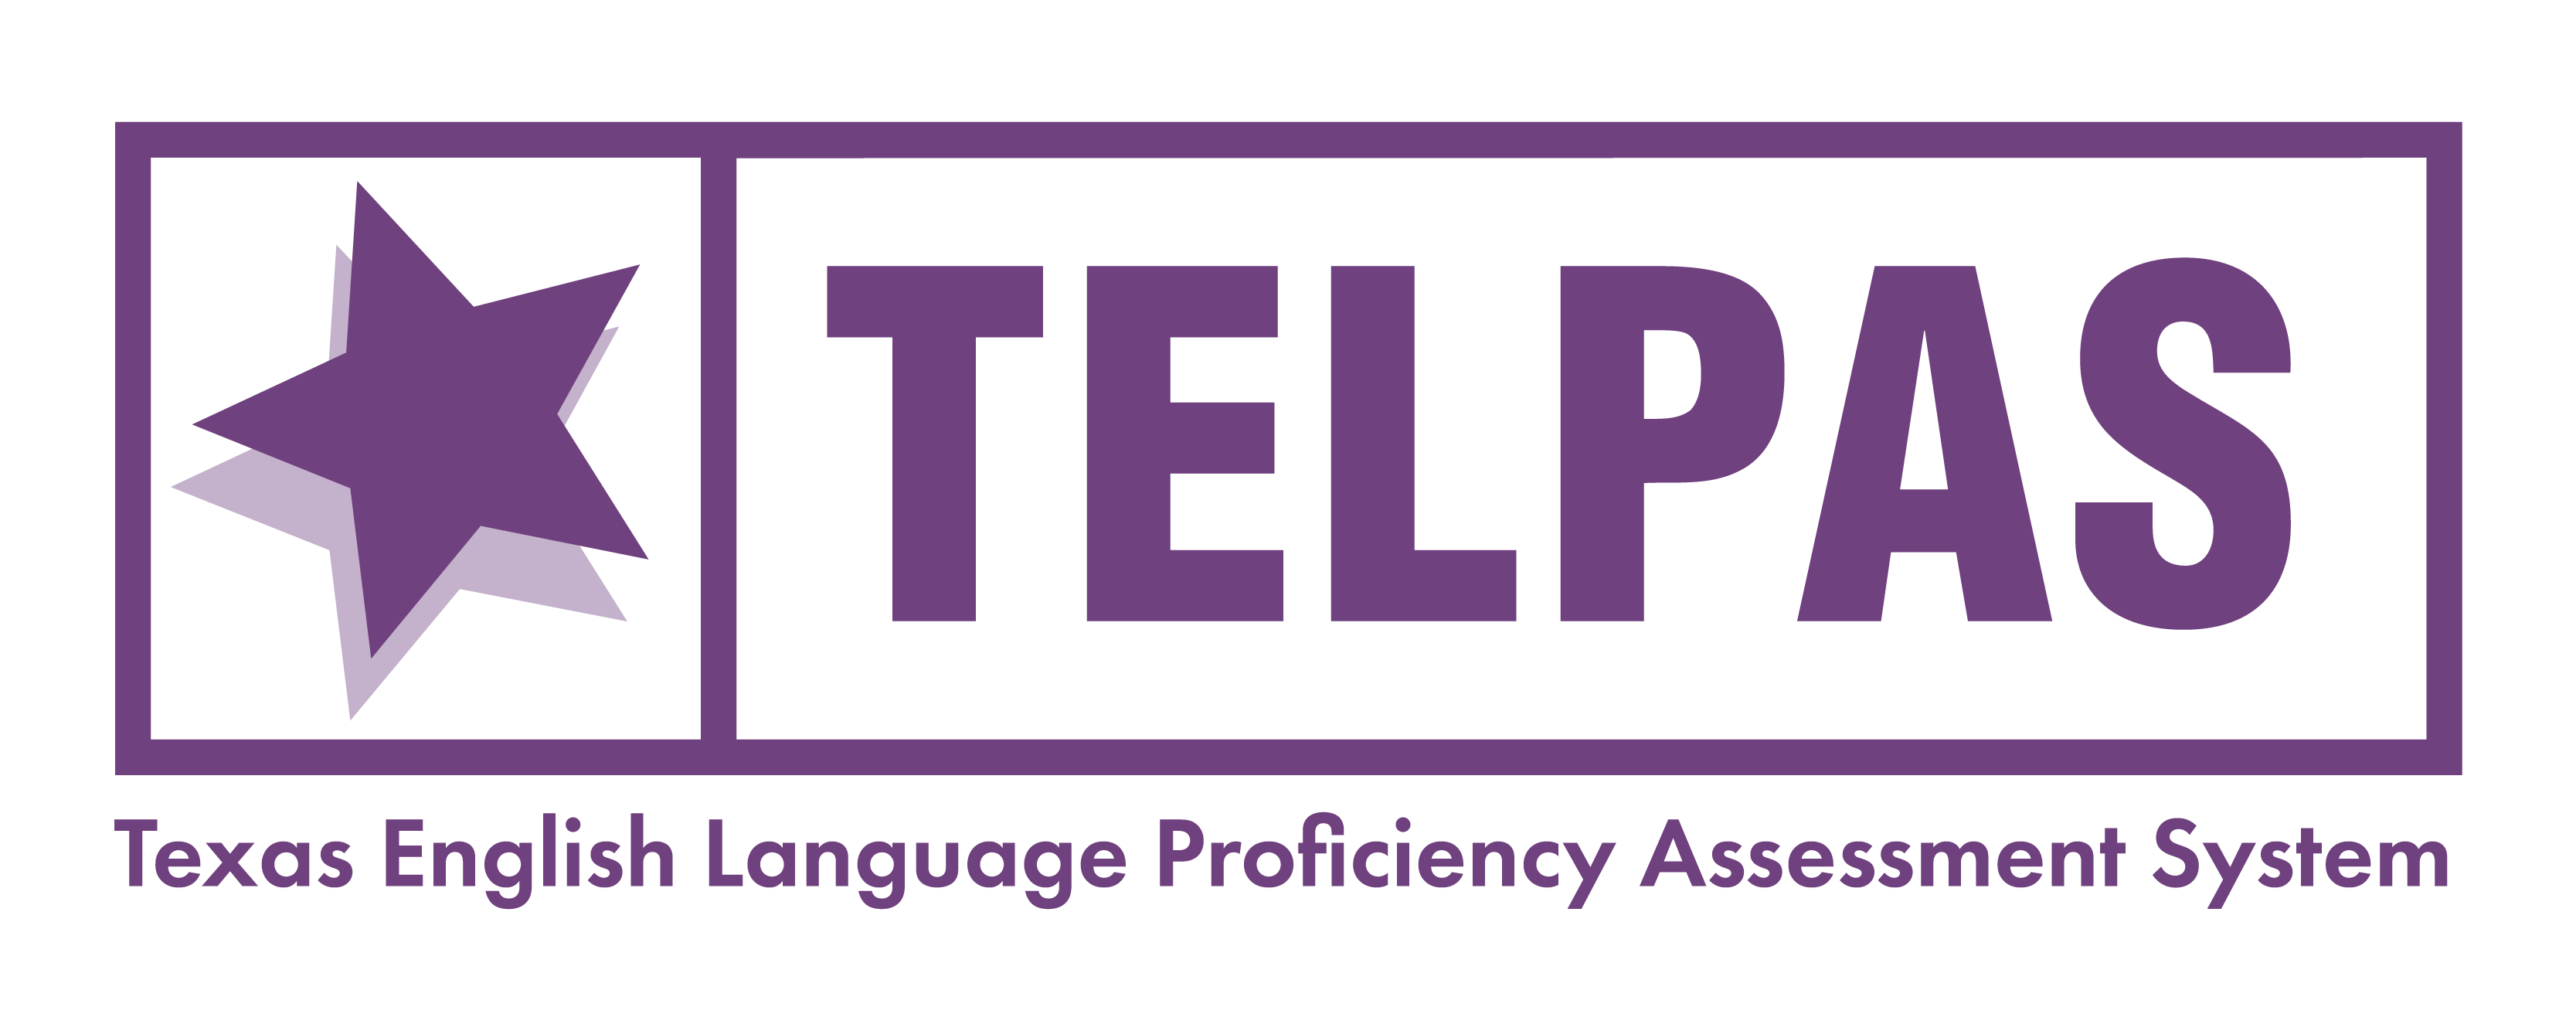 TELPAS Texas English Language Proficiency Assessment System